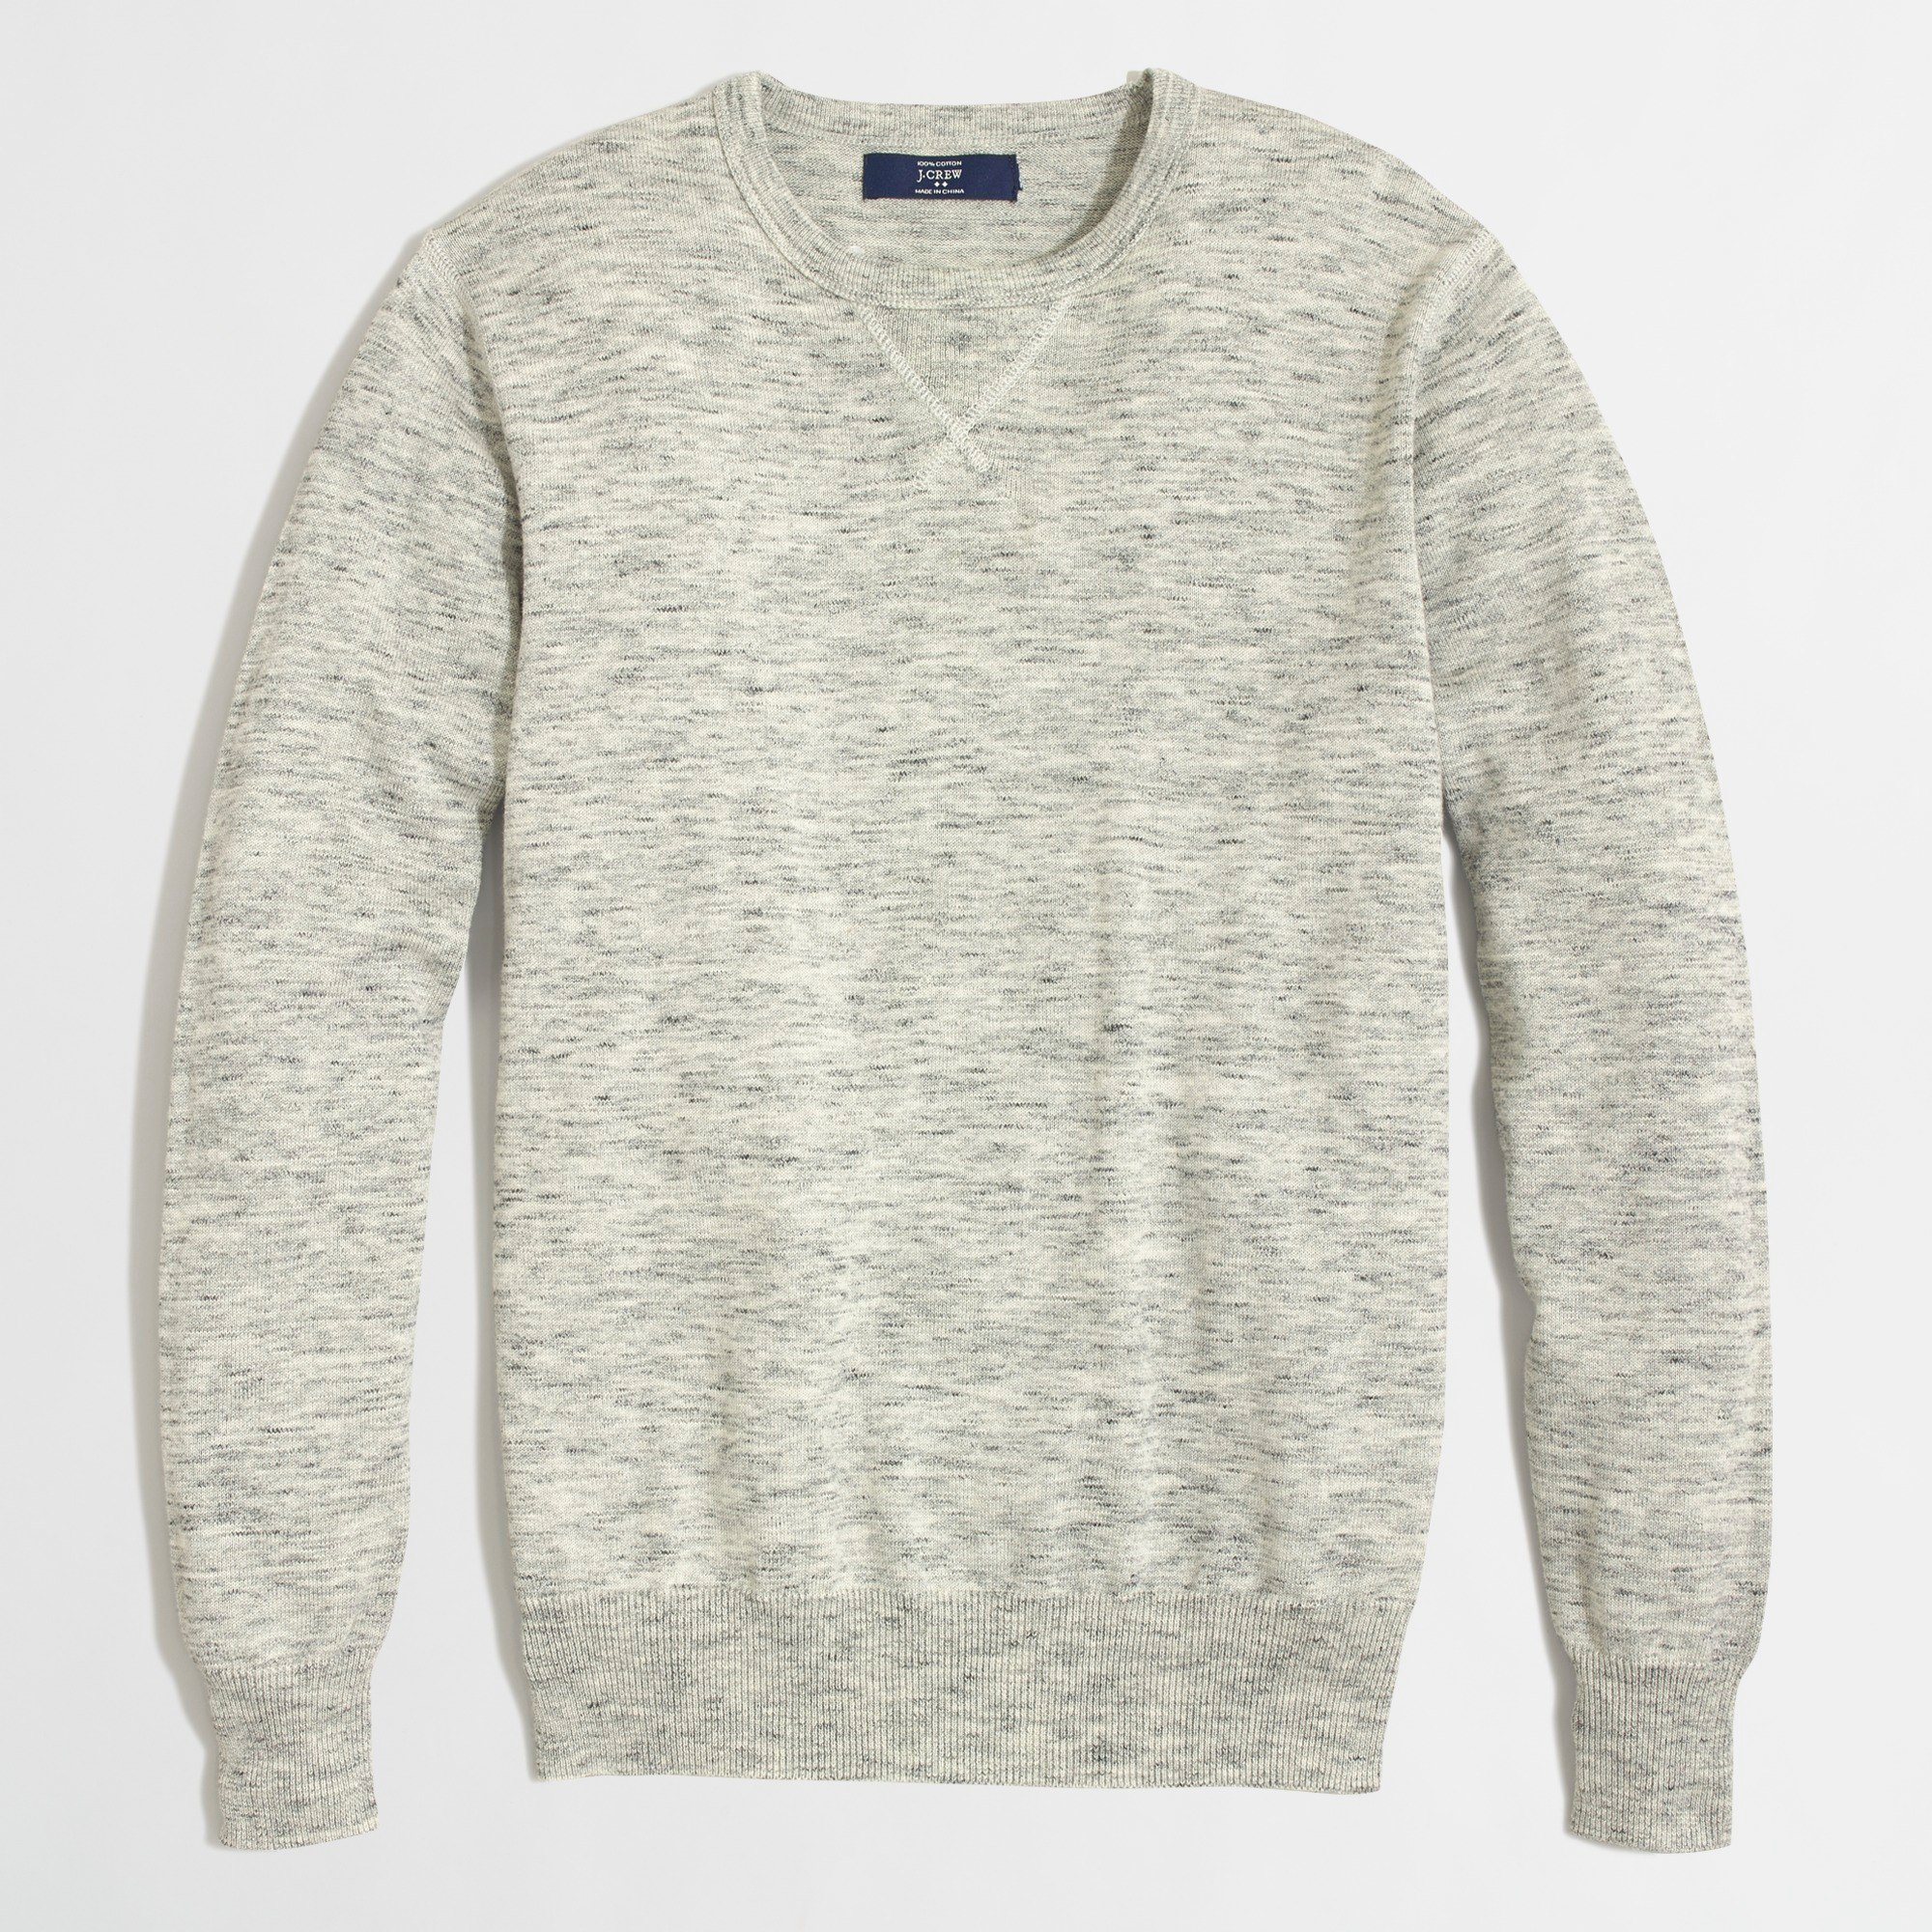 Heathered sweatshirt sweater - Men's Sweaters | J.Crew Factory